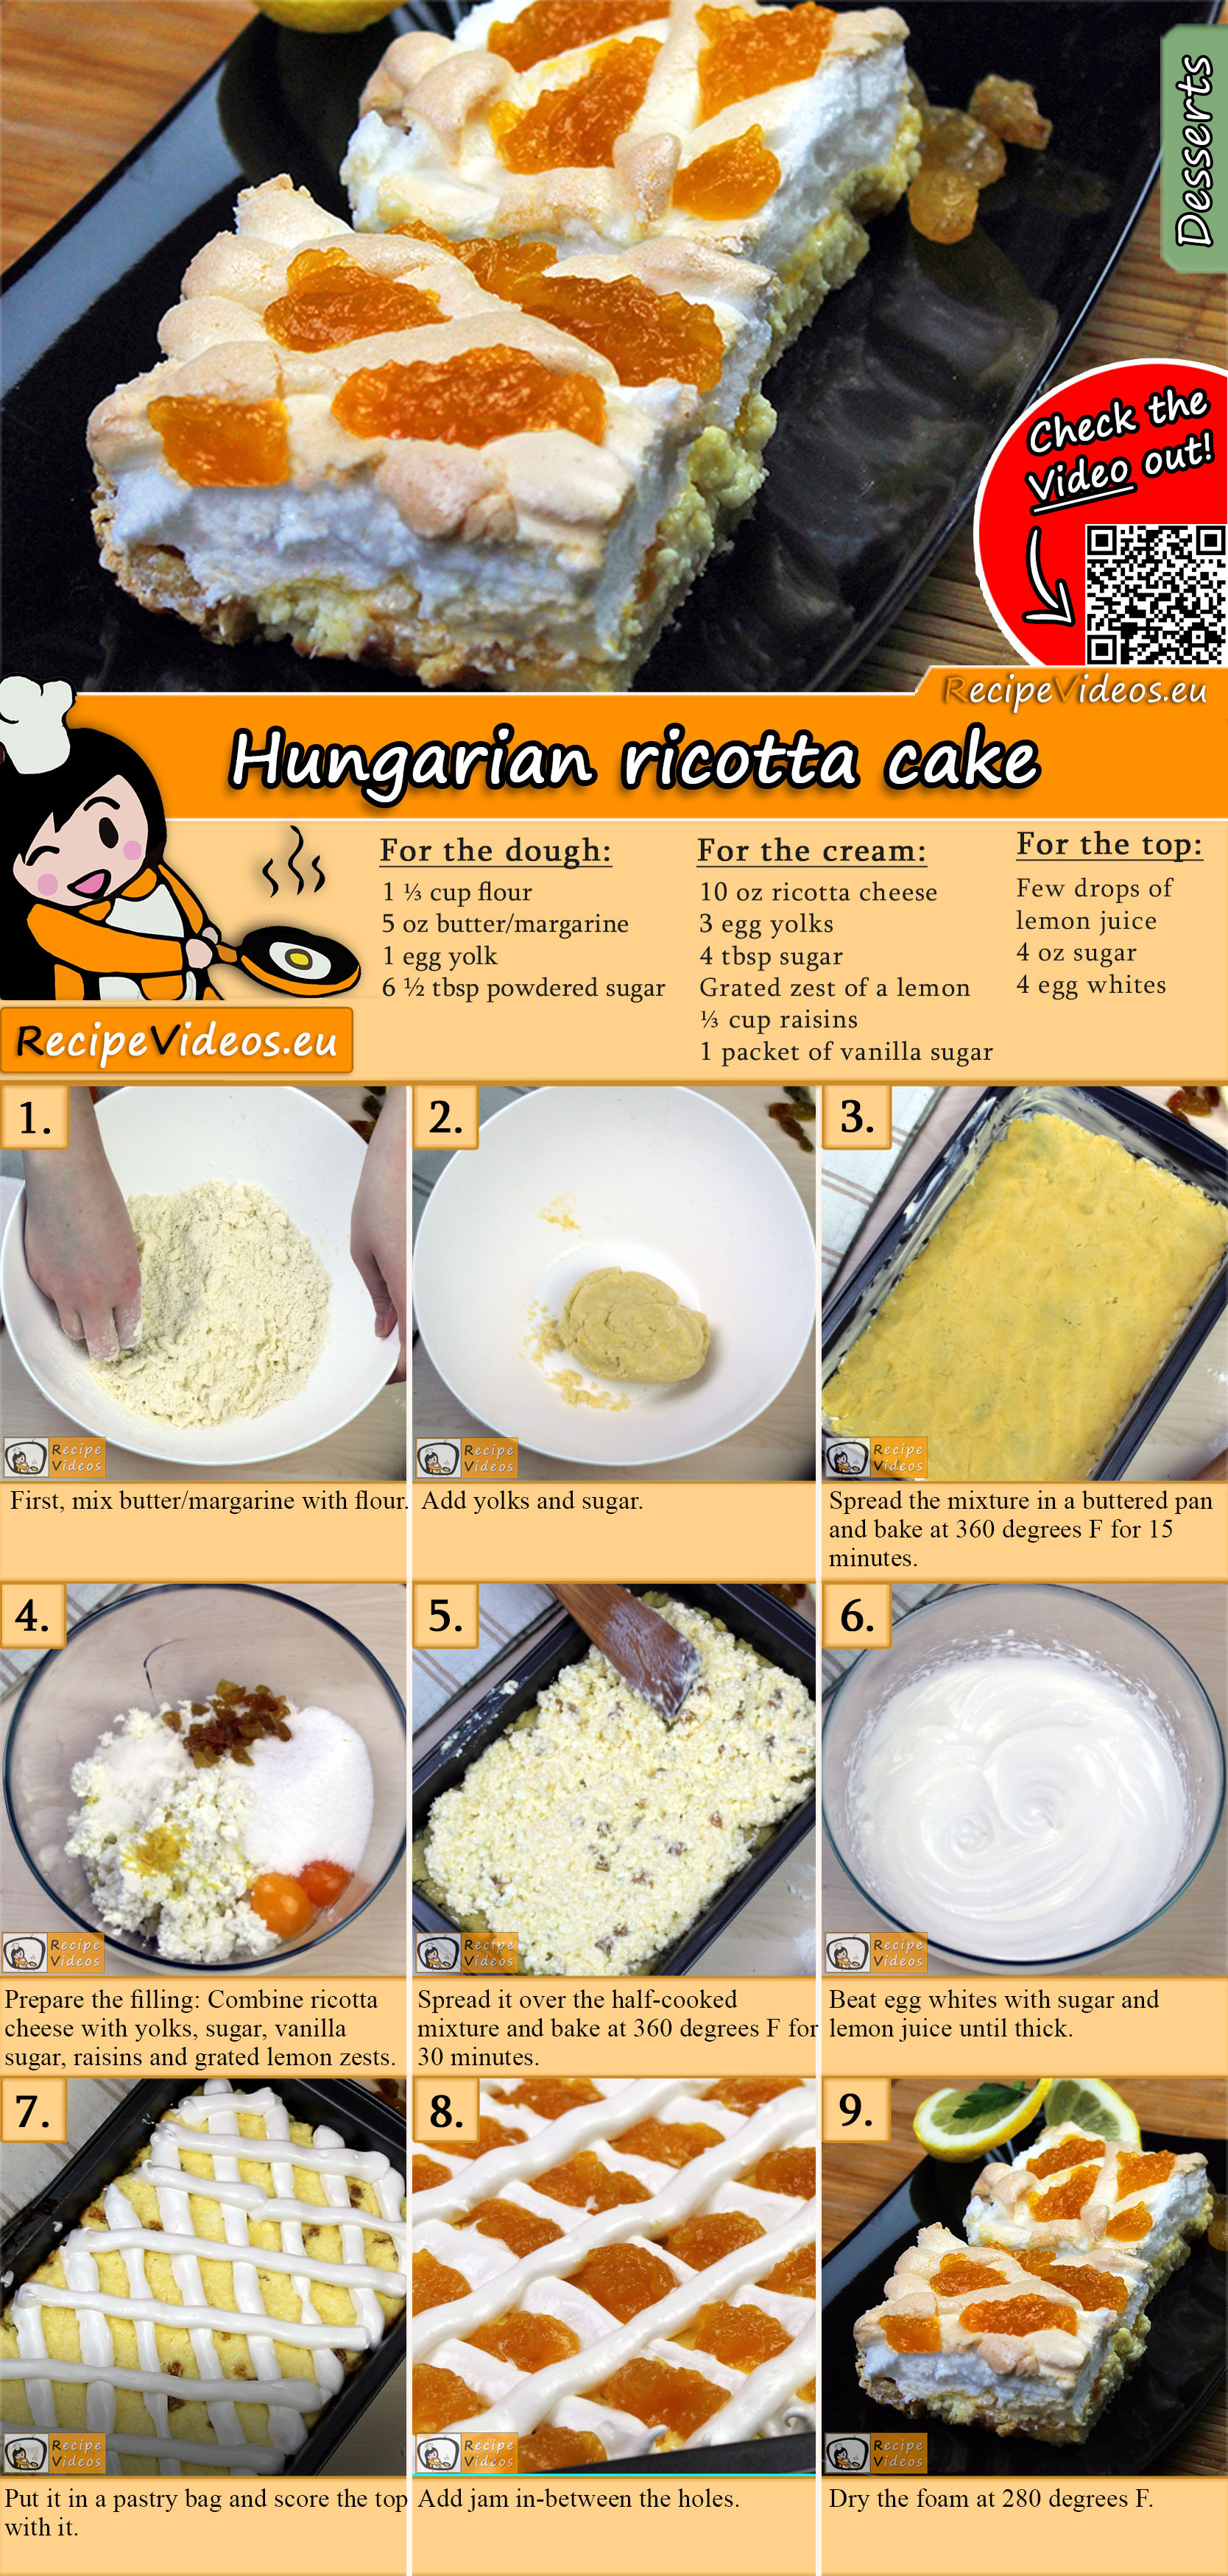 Hungarian ricotta cake recipe with video